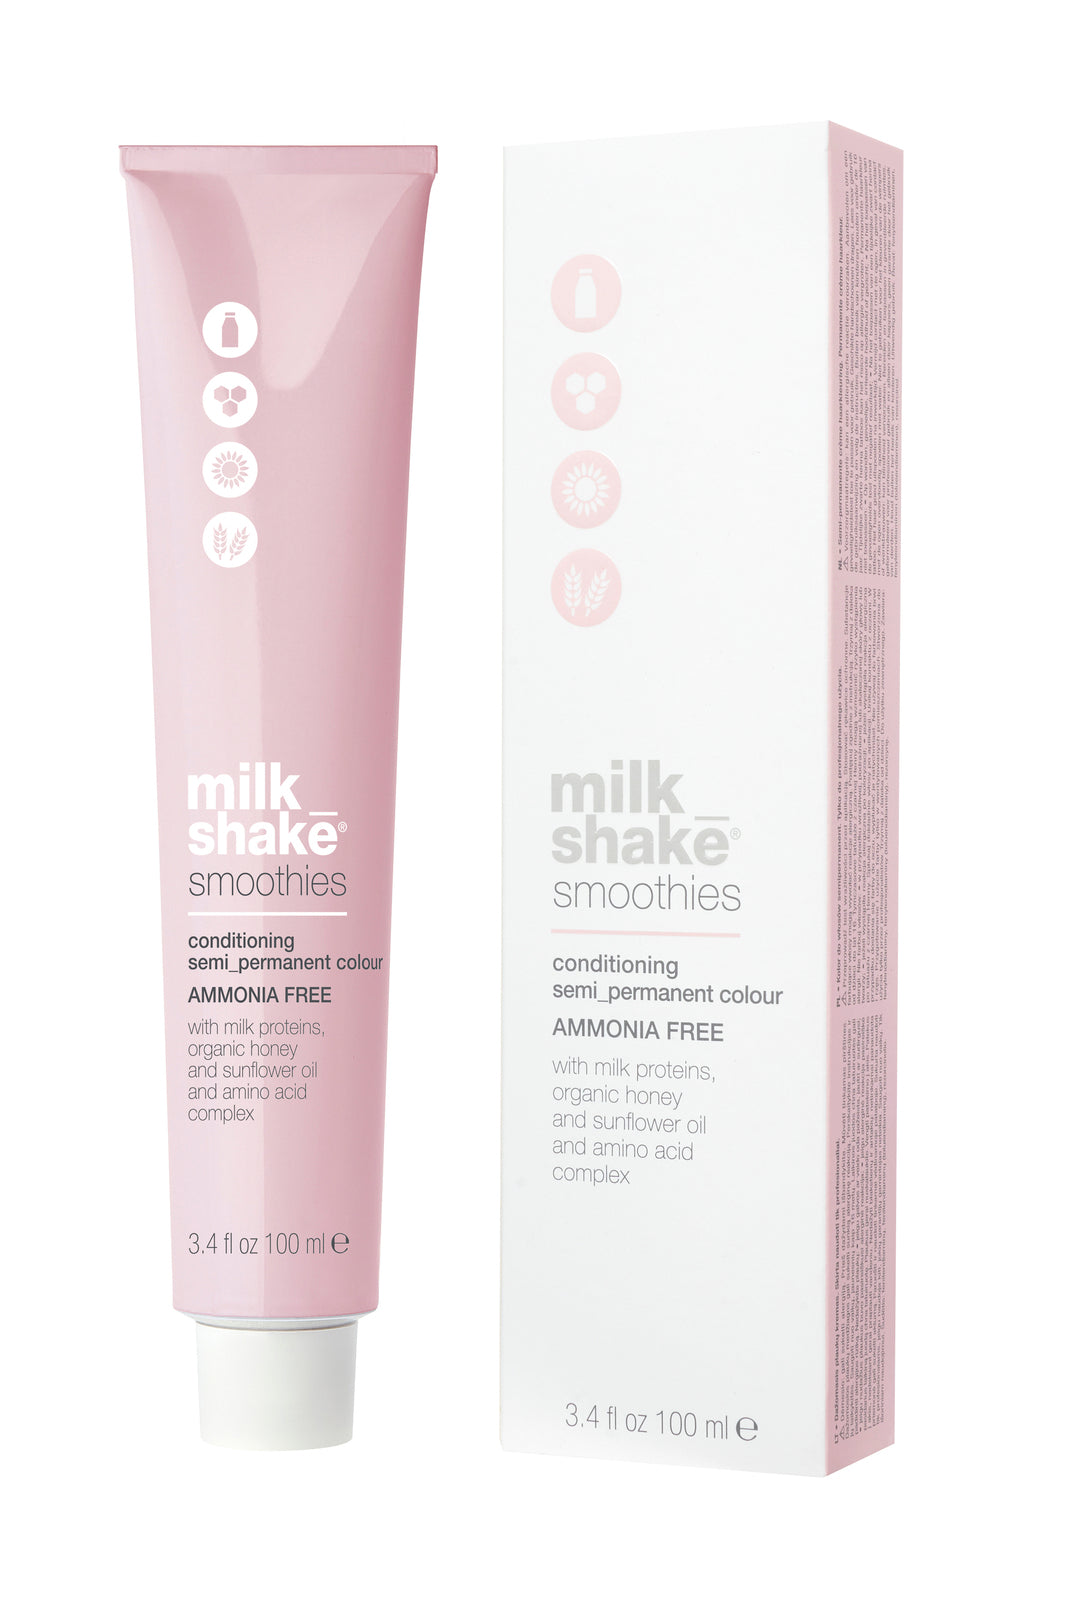 Milkshake smoothies semi-permanent color 4.4